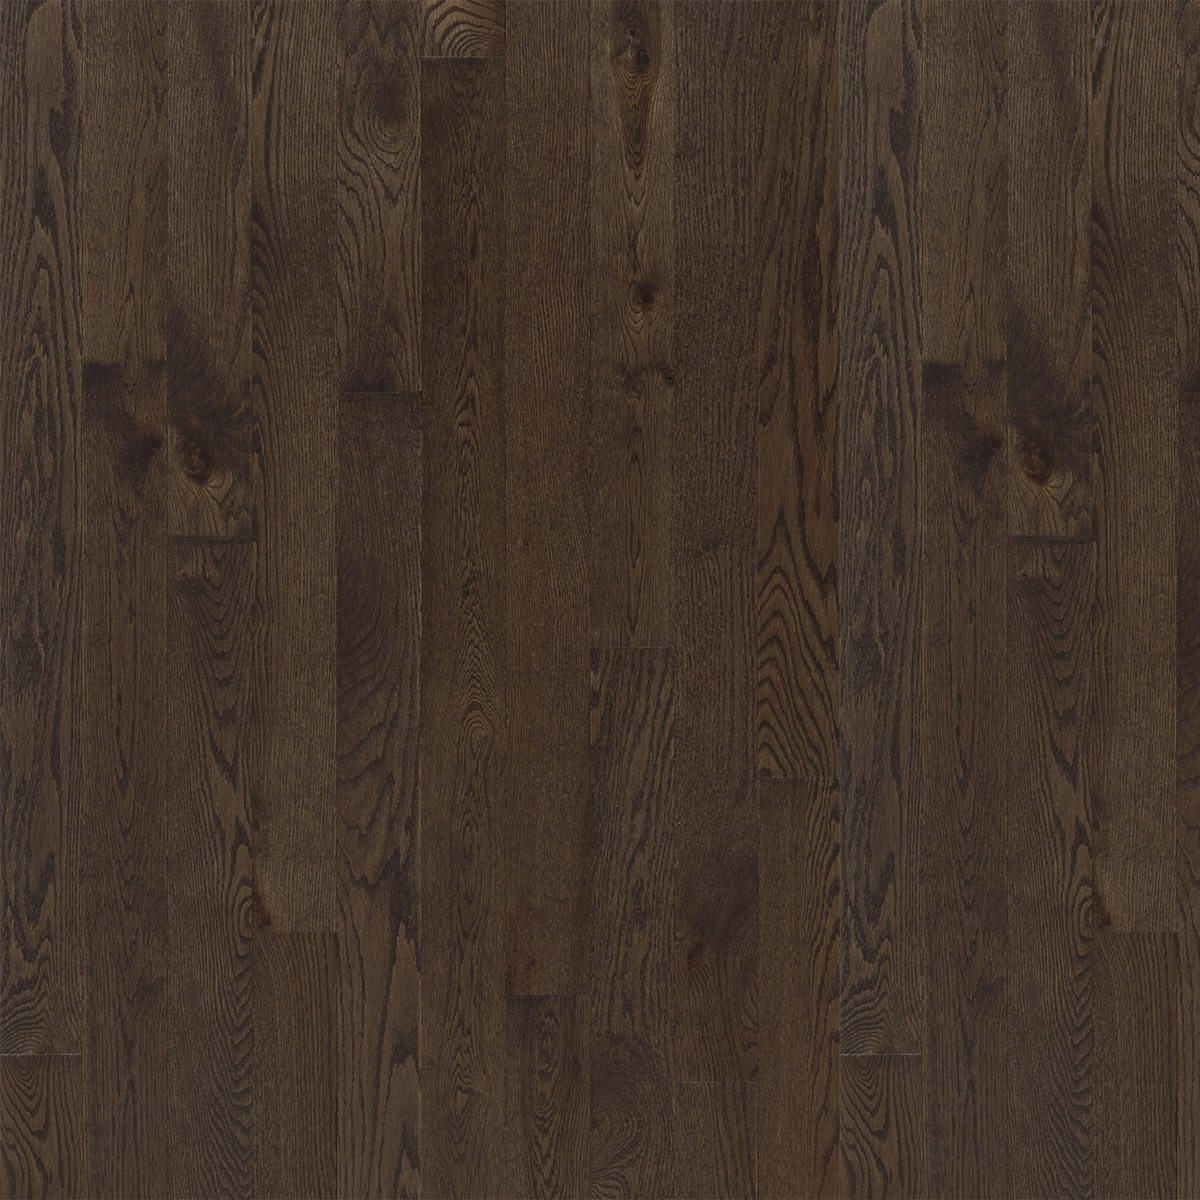 Red Oak Charcoal 3 1 4 Hardwood Flooring, 1 3 4 Hardwood Flooring